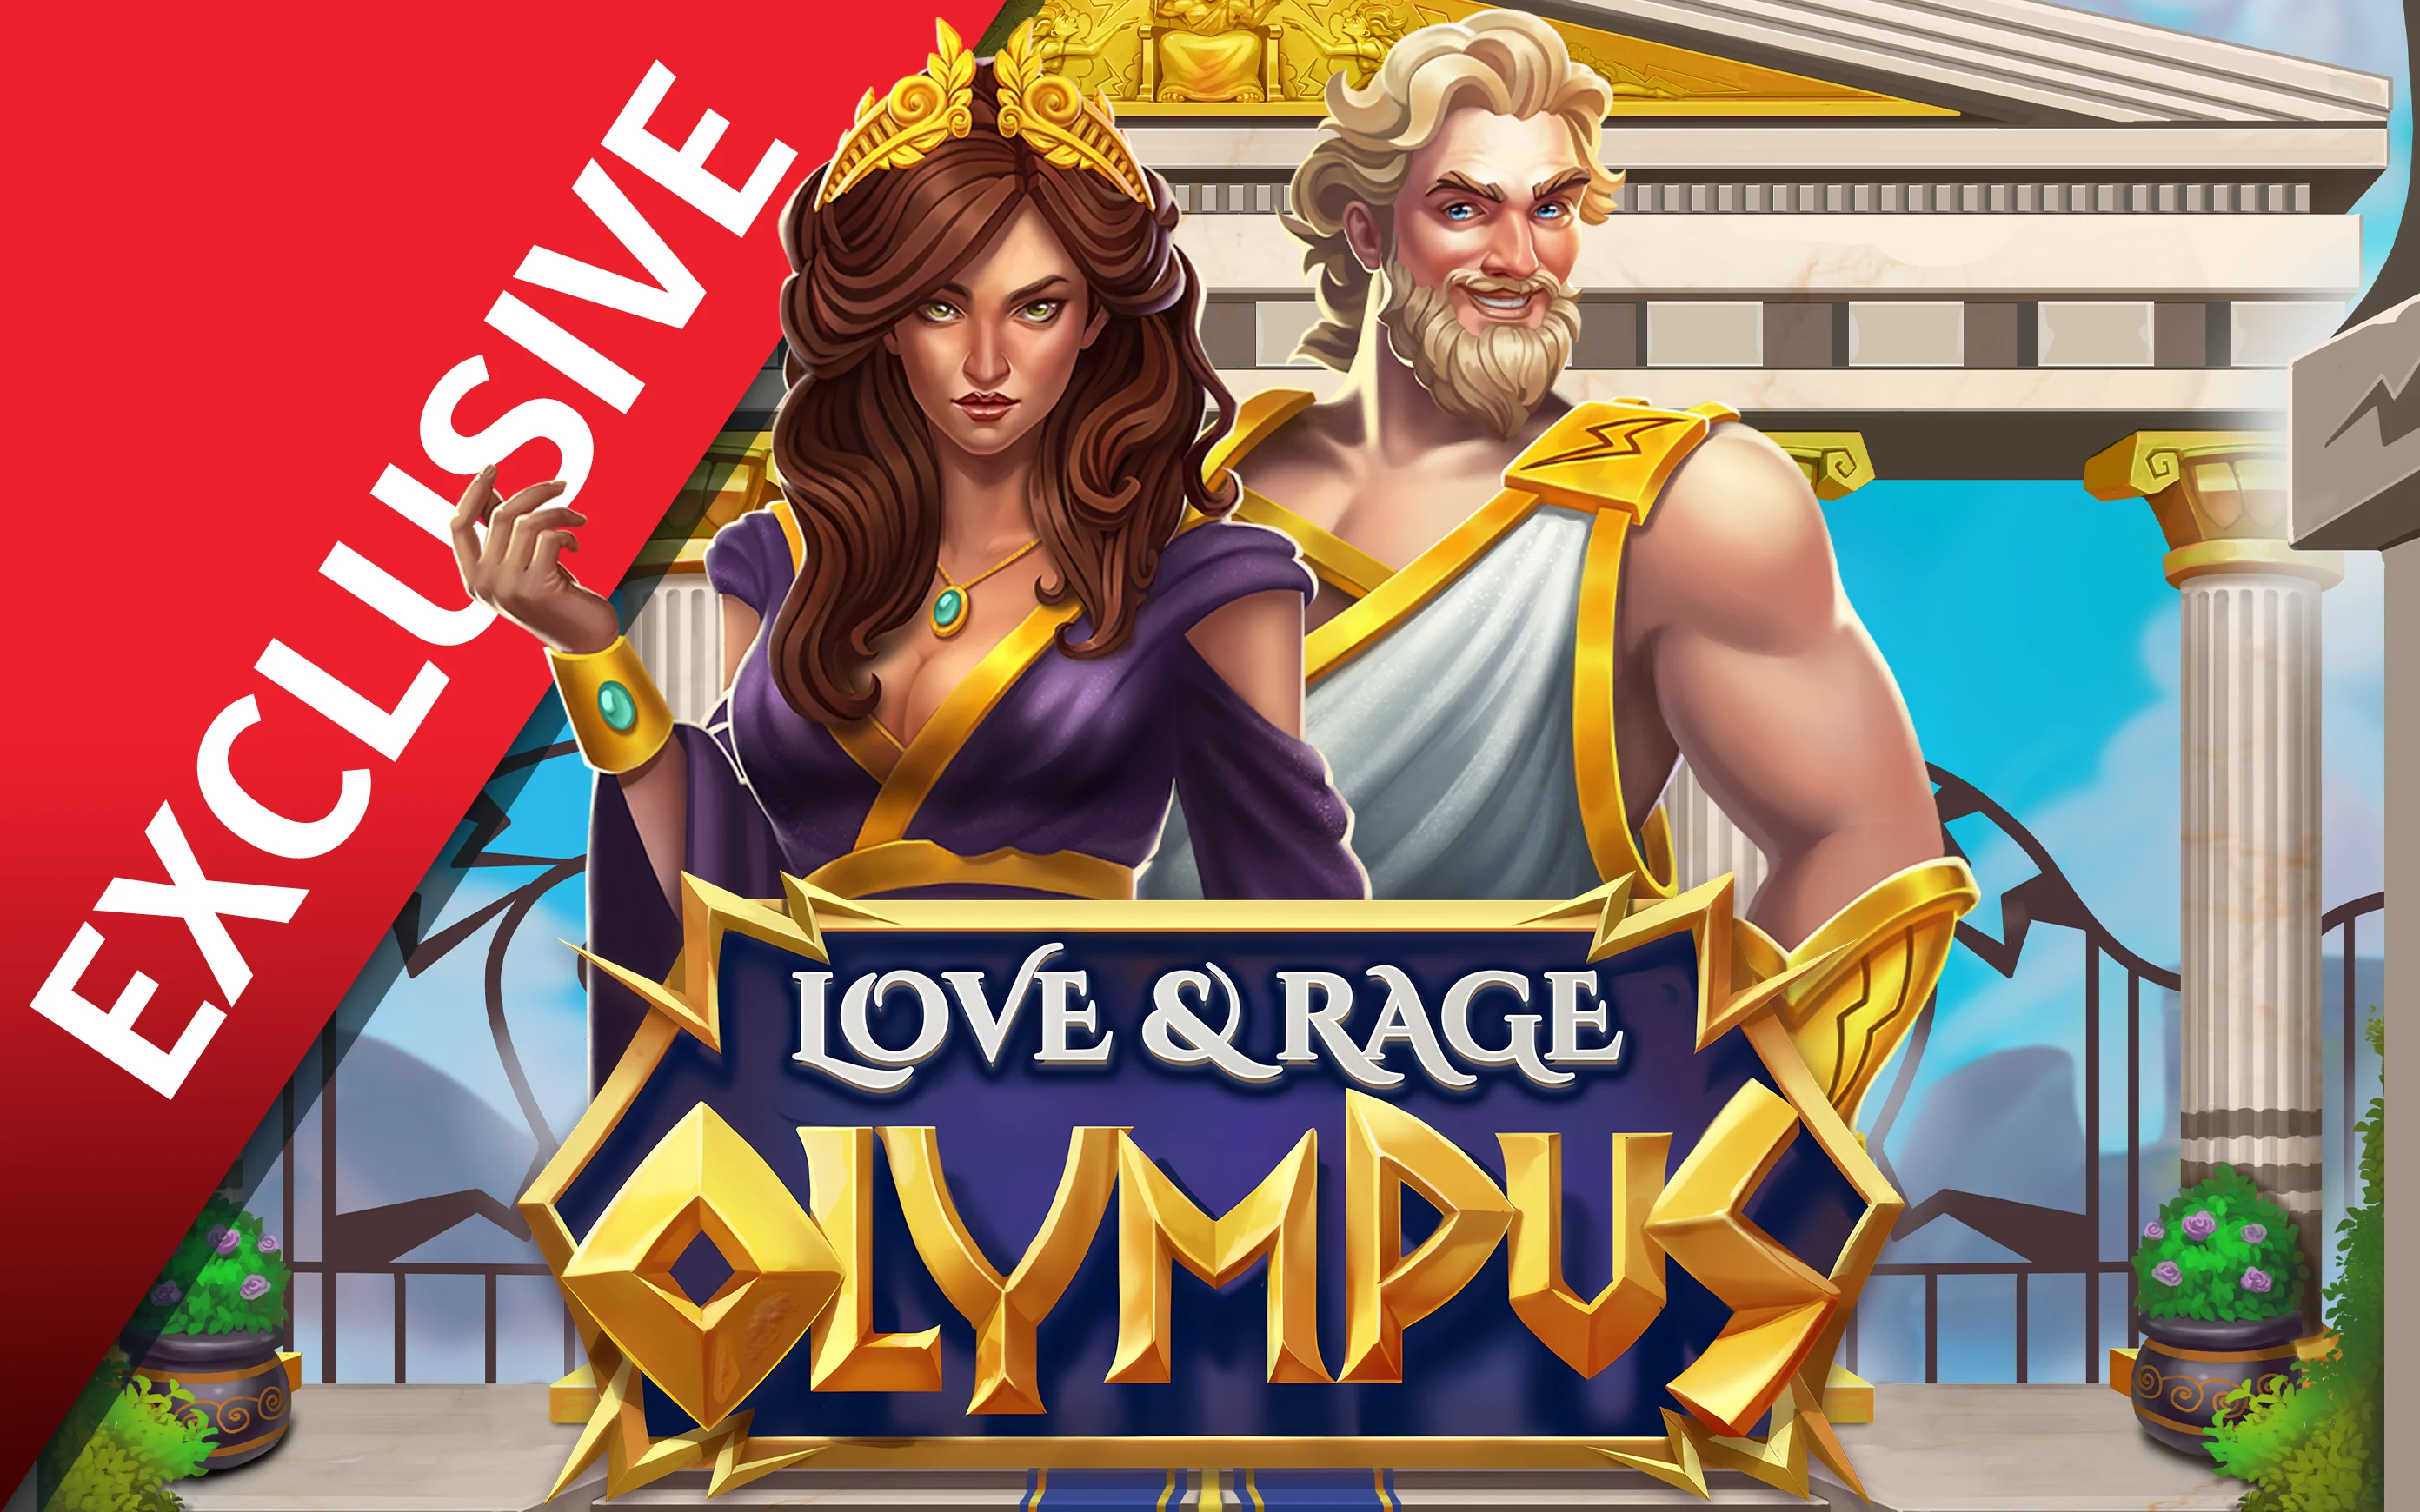 Gioca a Love and Rage – Olympus sul casino online Starcasino.be